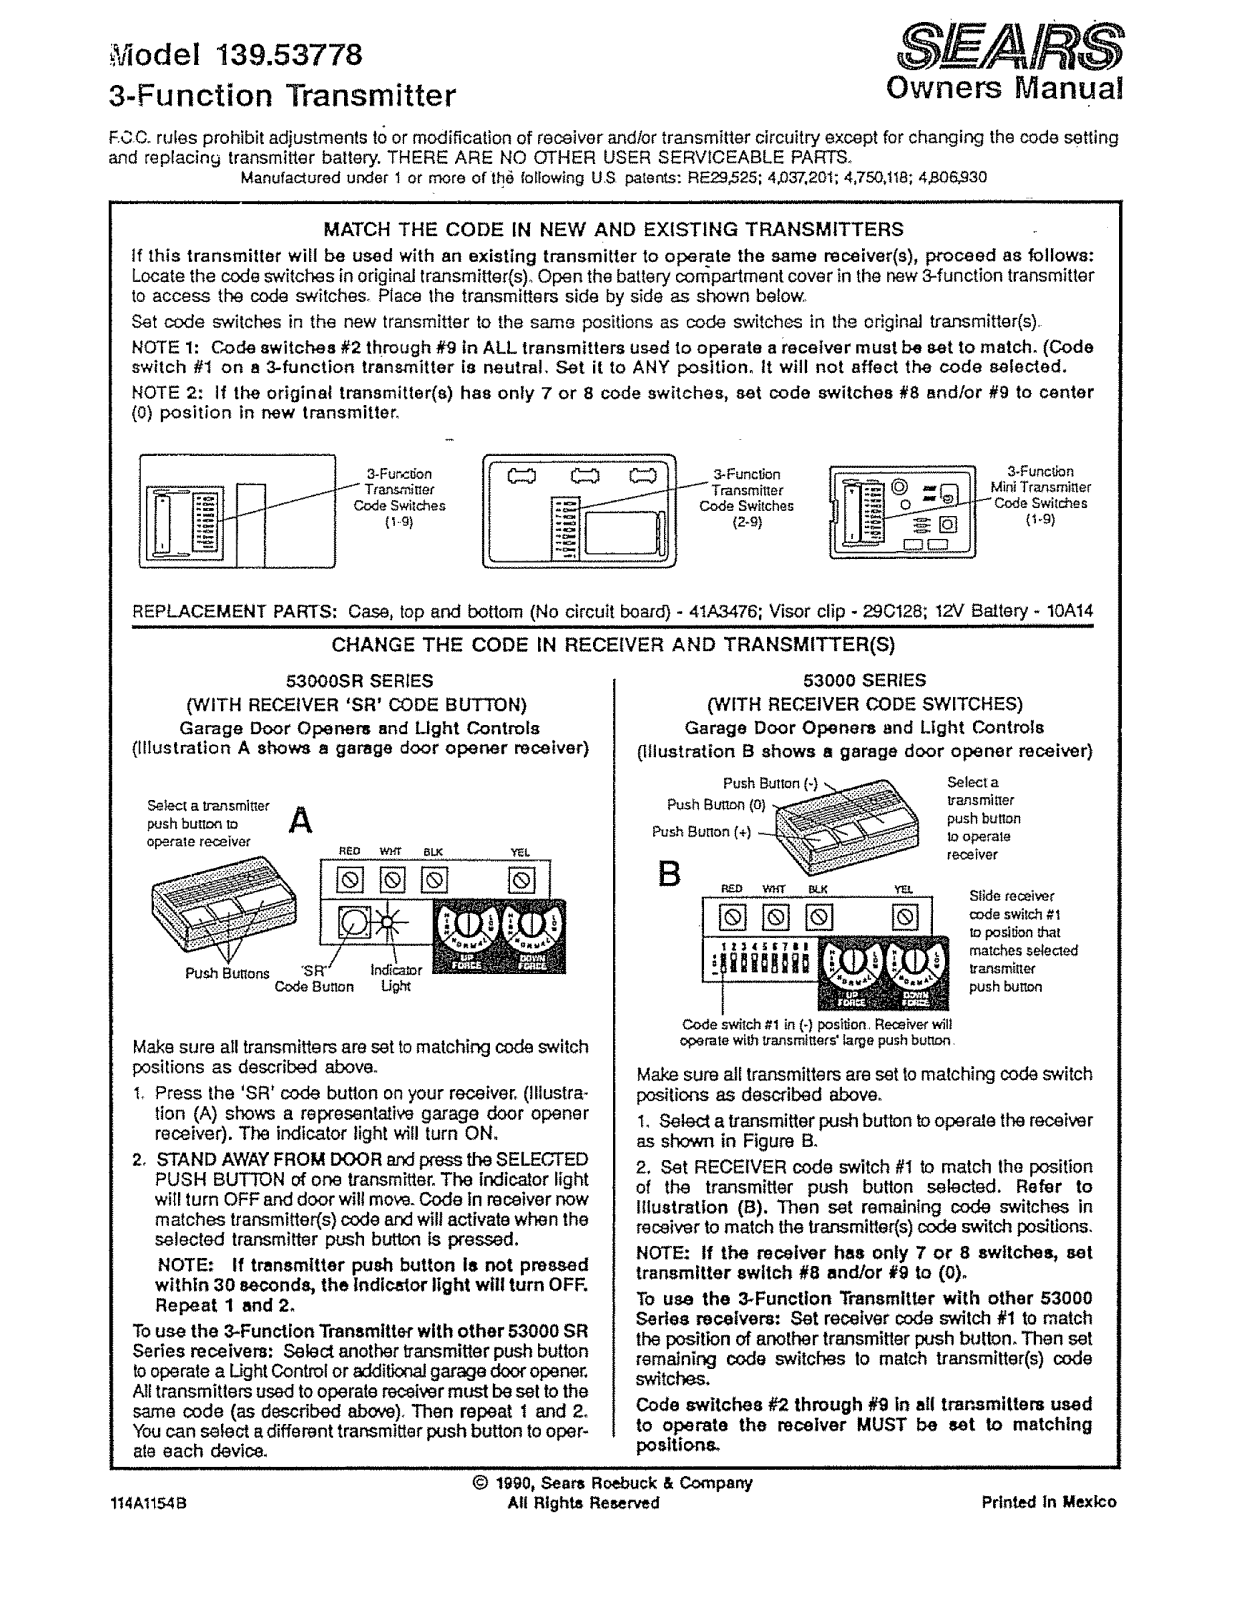 Craftsman 139.53778 Owner's Manual